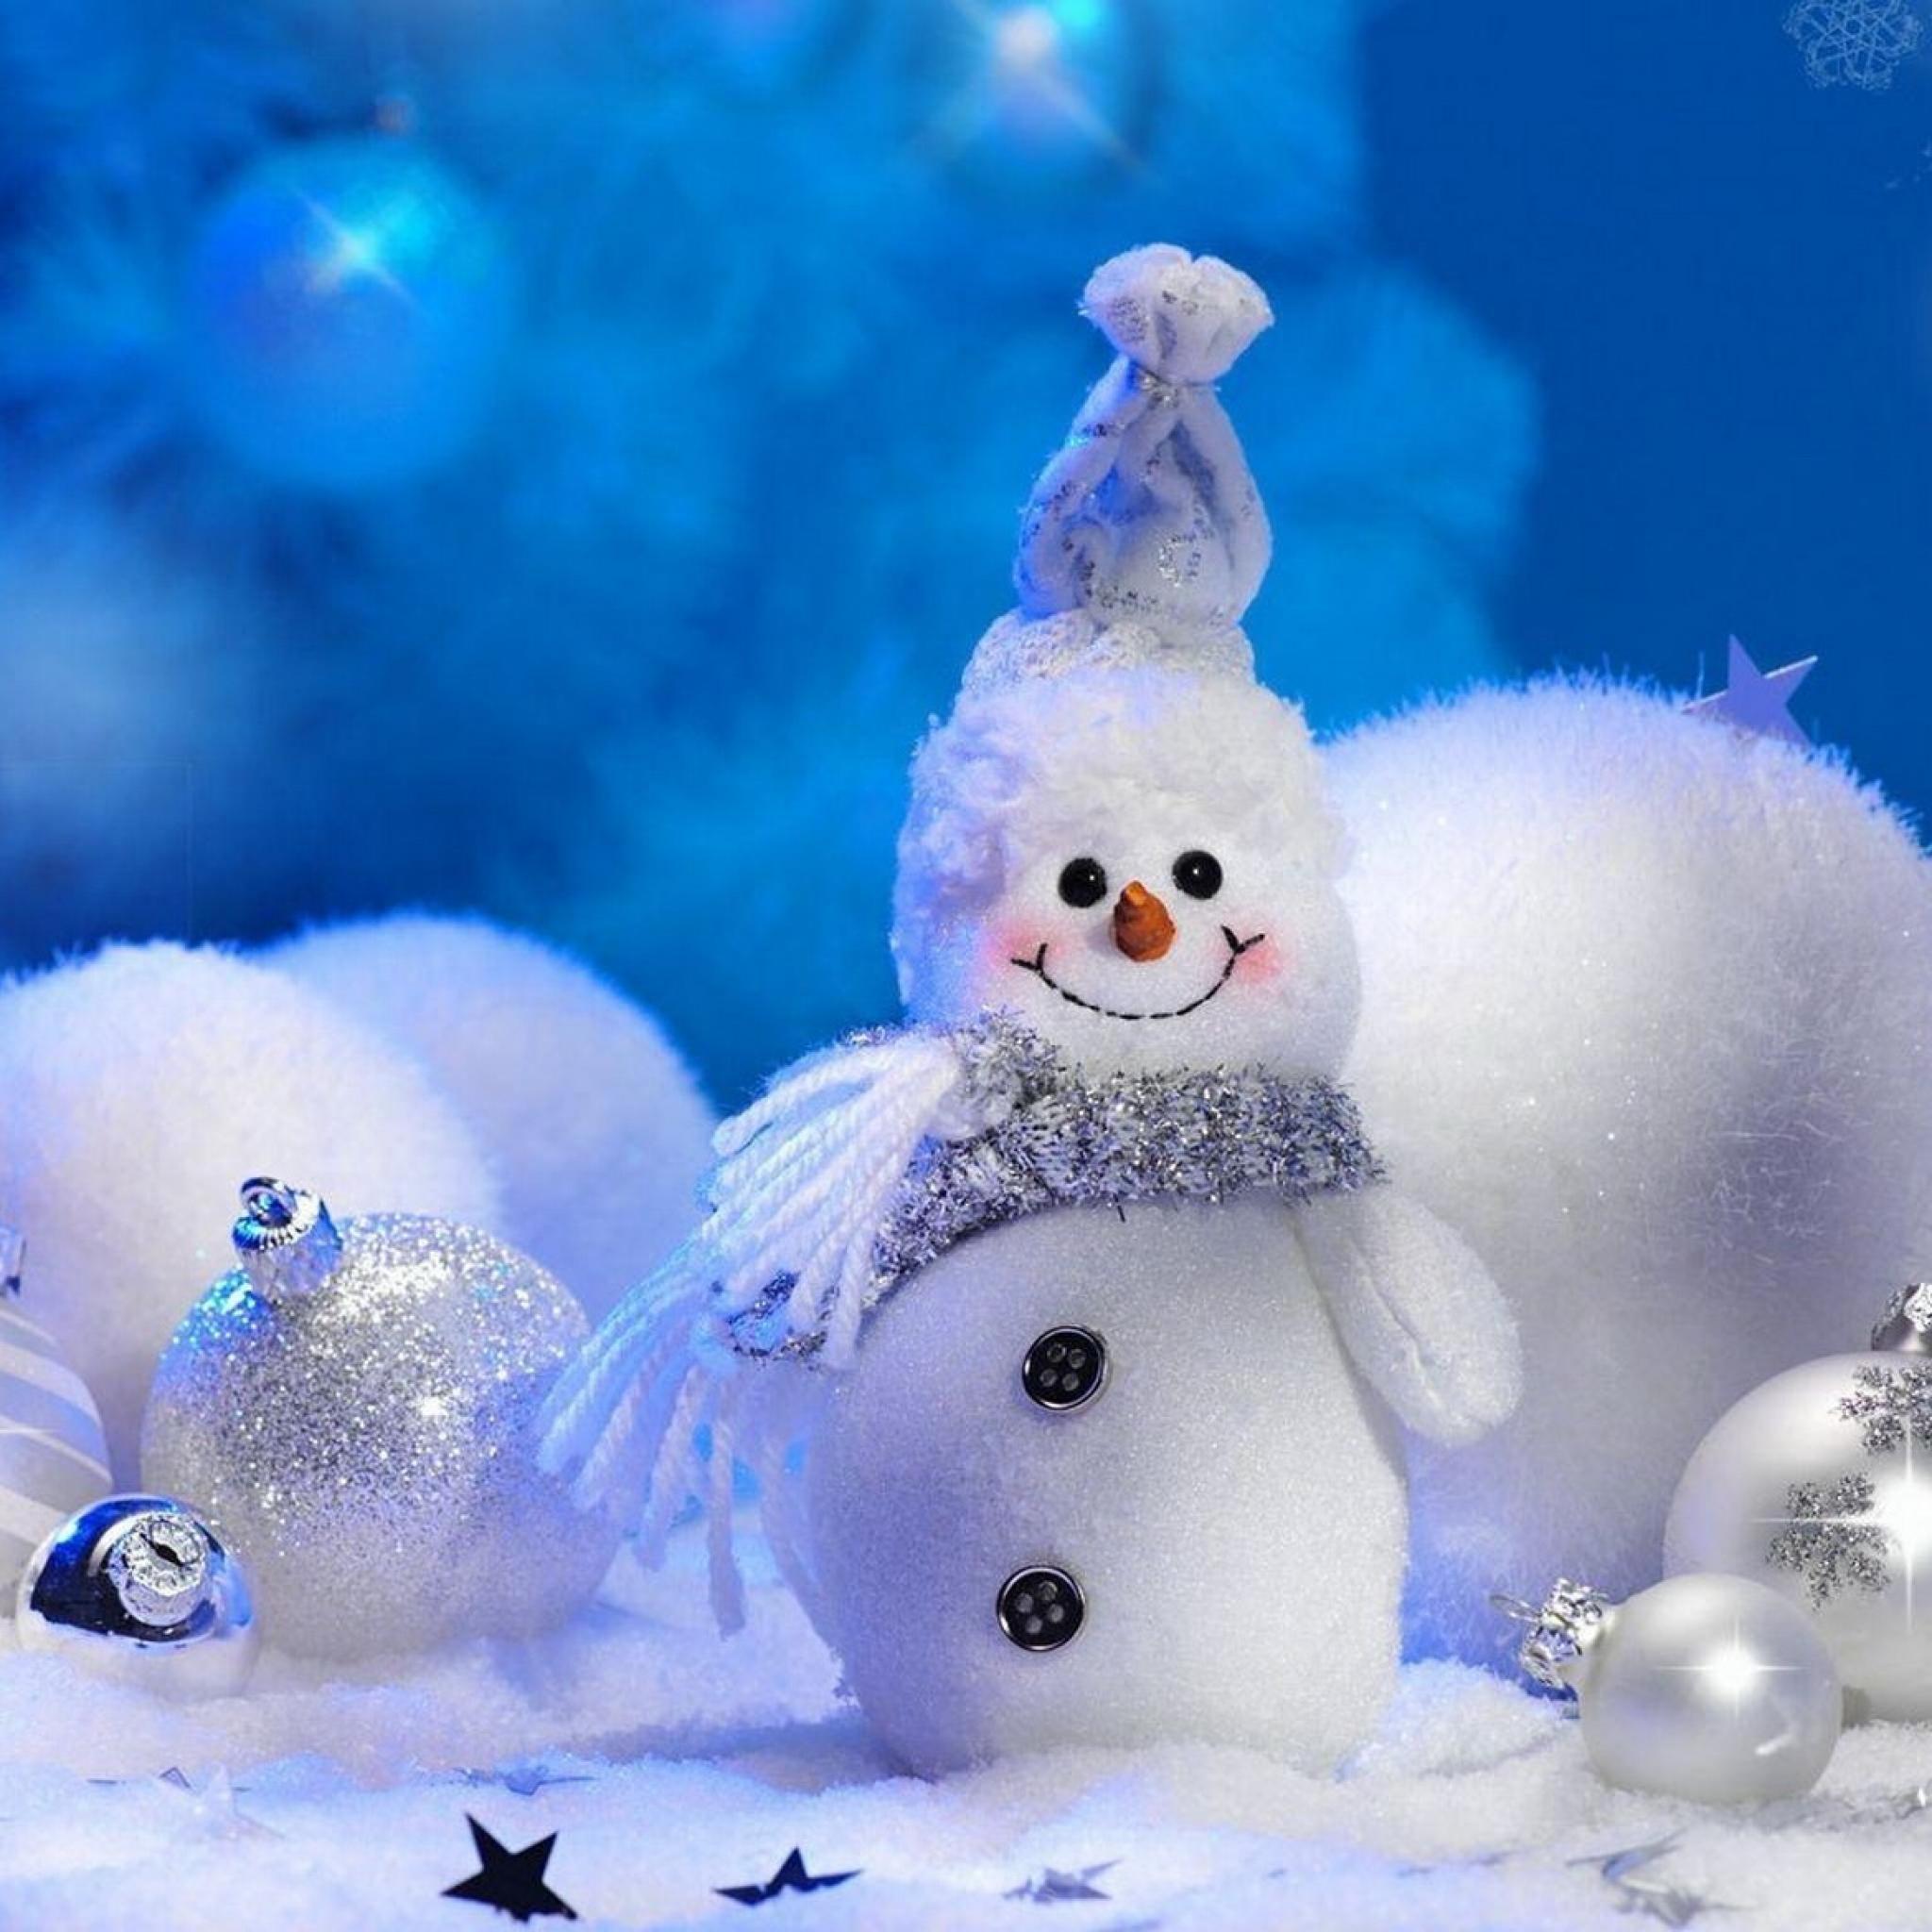 Snowman Wallpaper Live Photos Pc Desktop